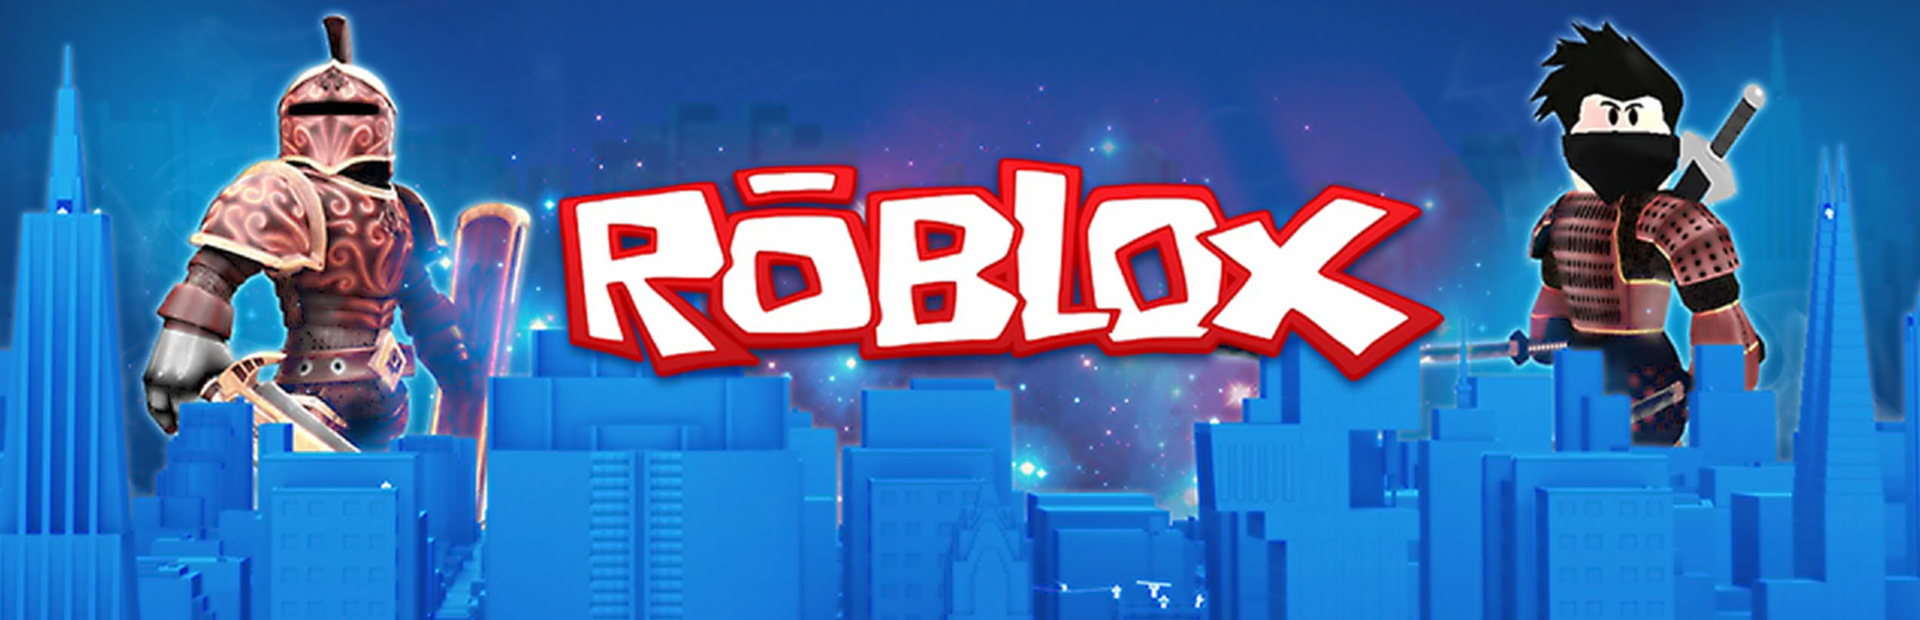 roblox - SteamGridDB